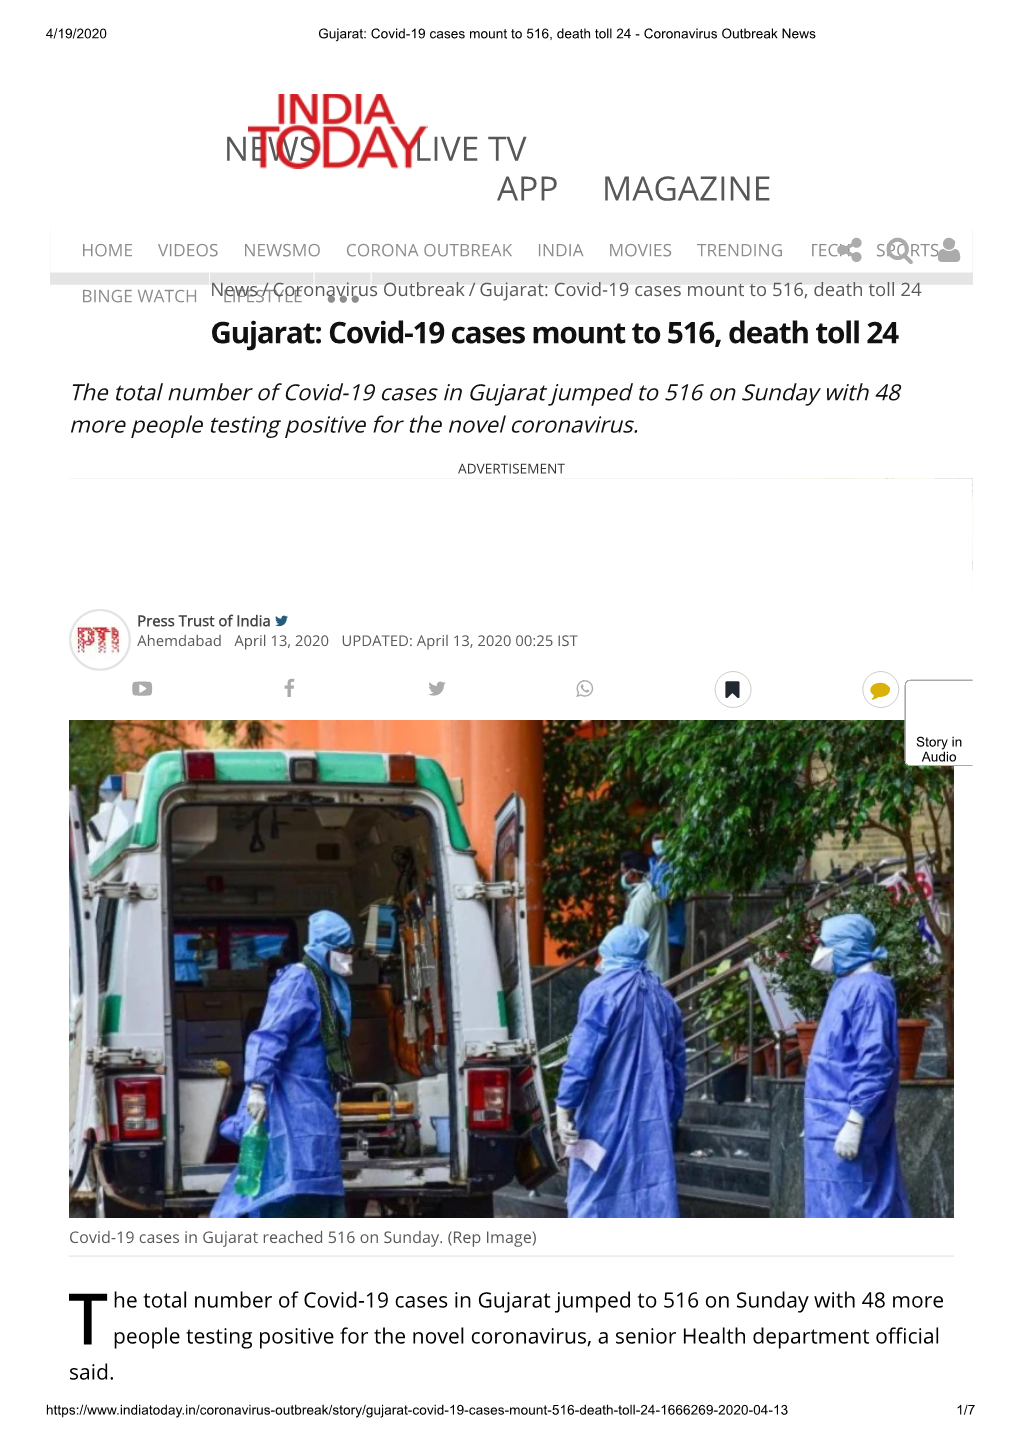 Gujarat: Covid-19 Cases Mount to 516, Death Toll 24 - Coronavirus Outbreak News